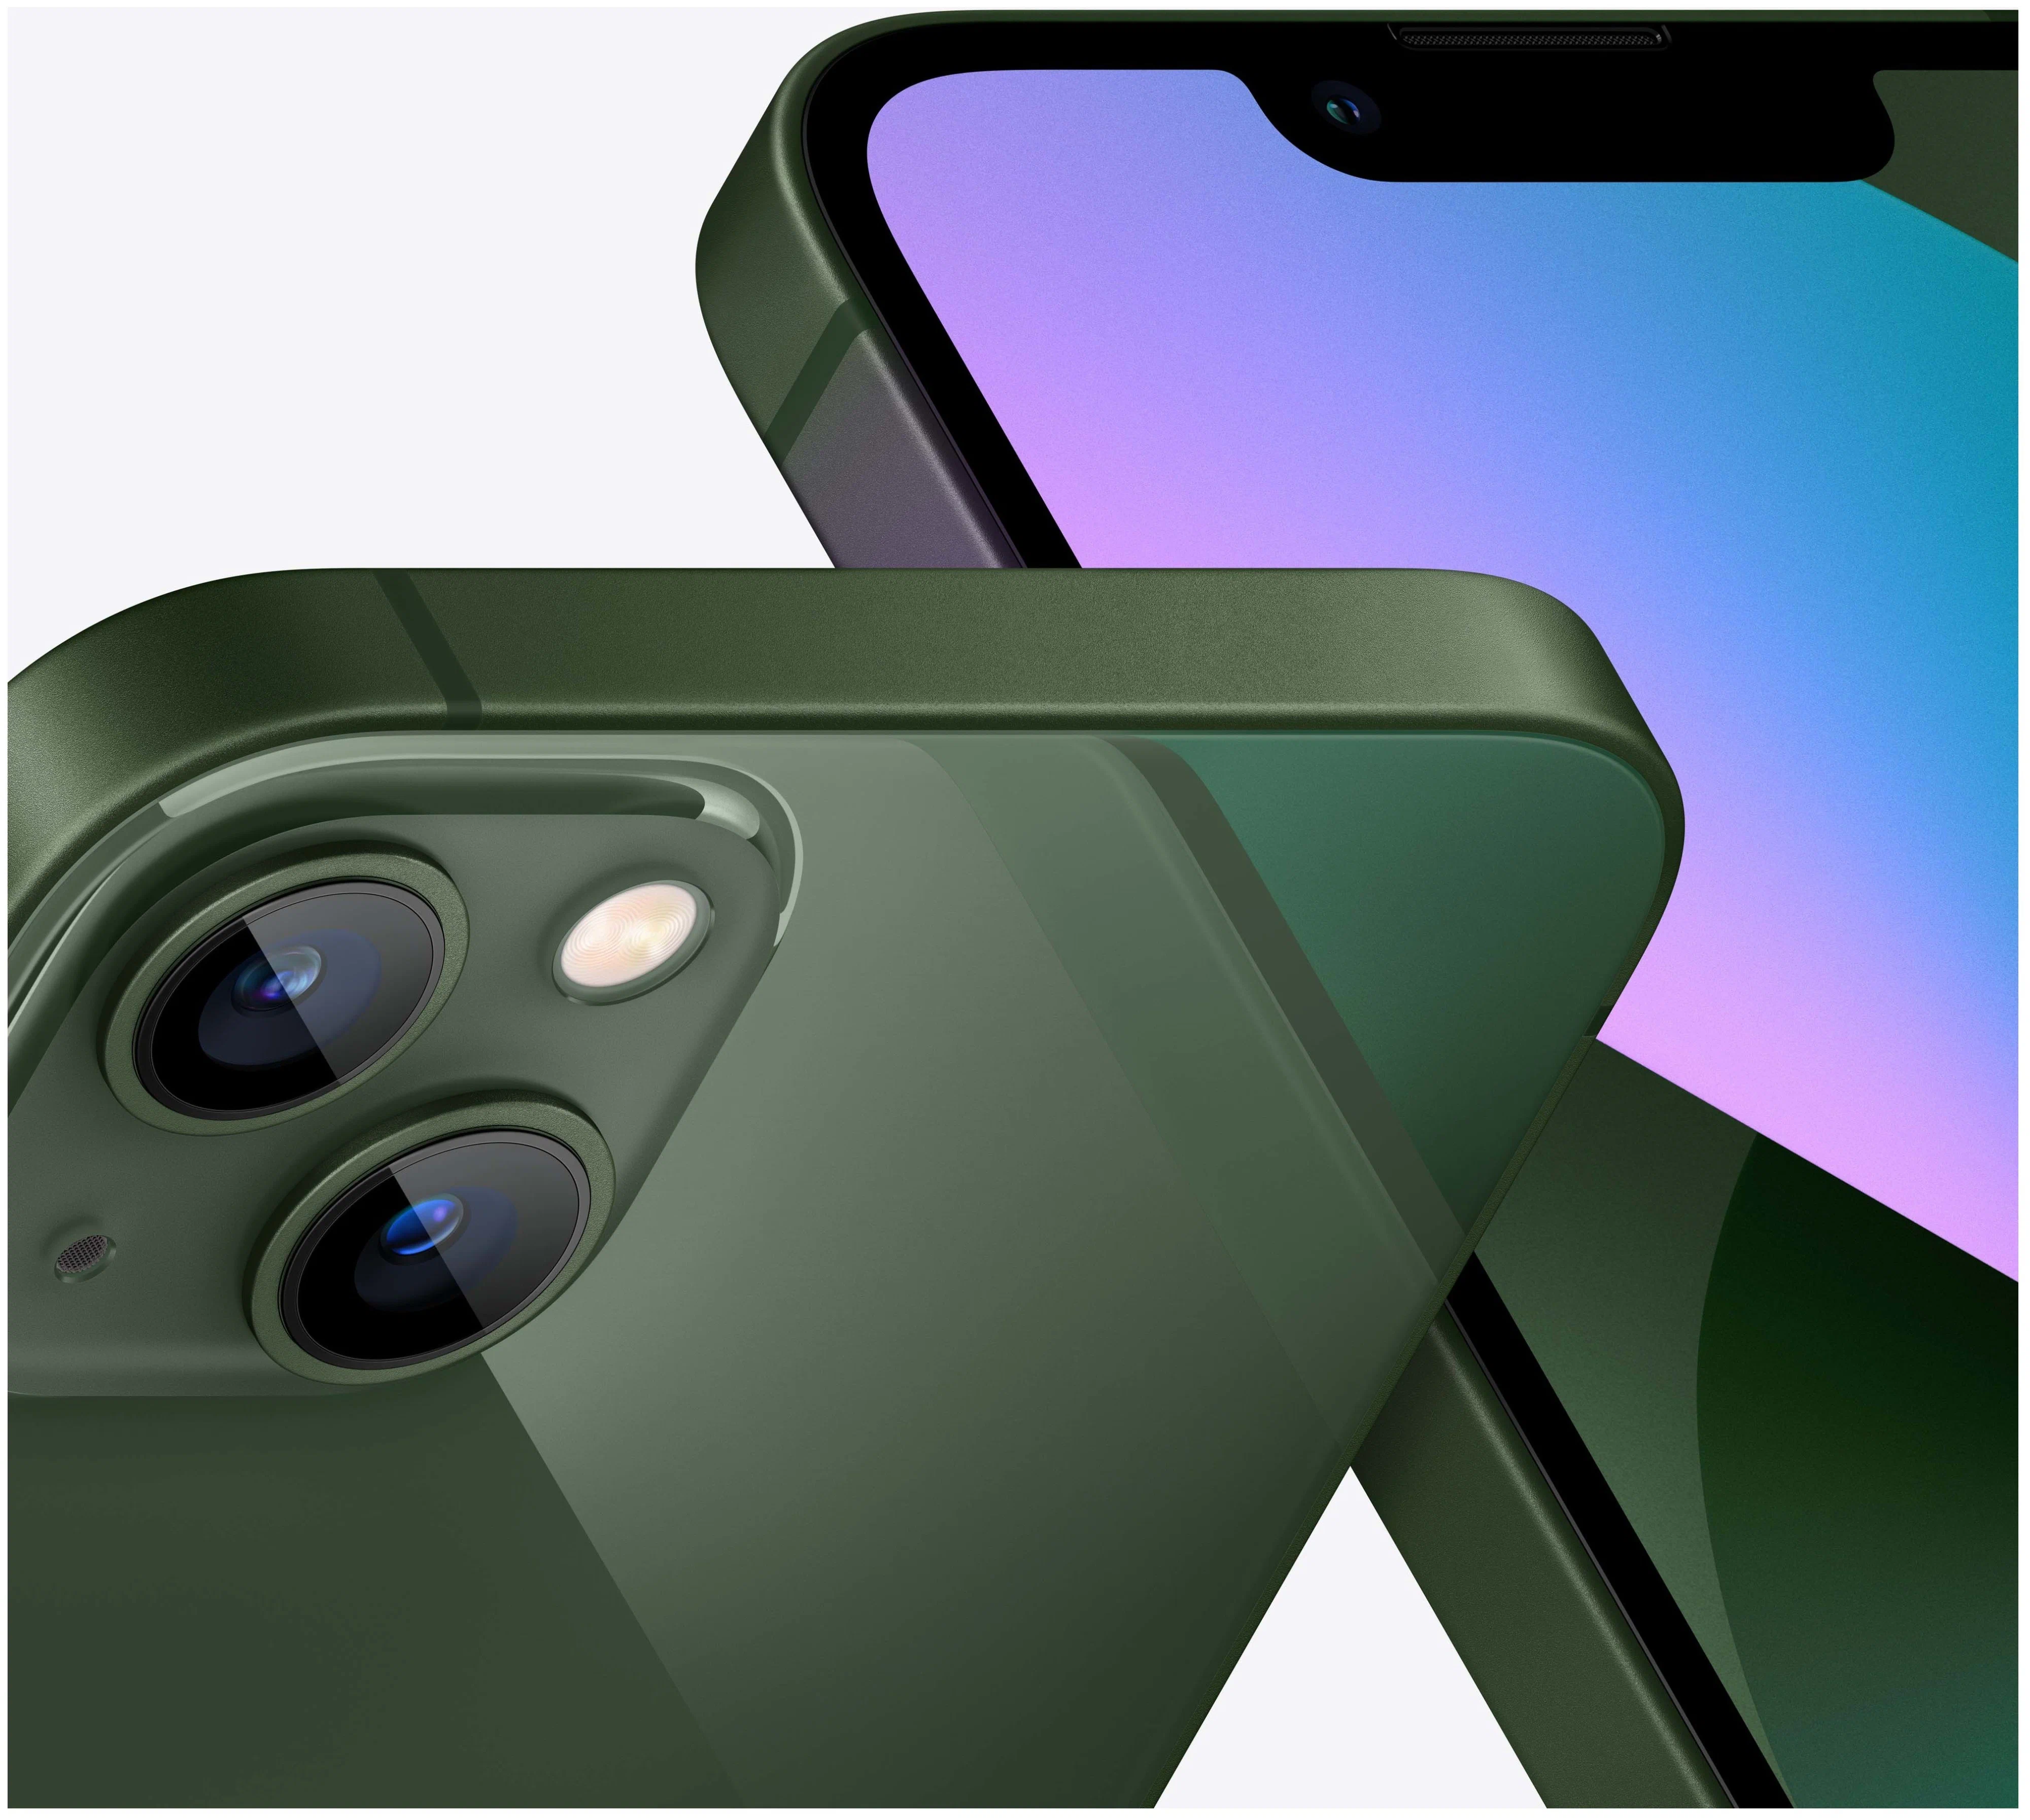 Смартфон Apple iPhone 13 512GB Green